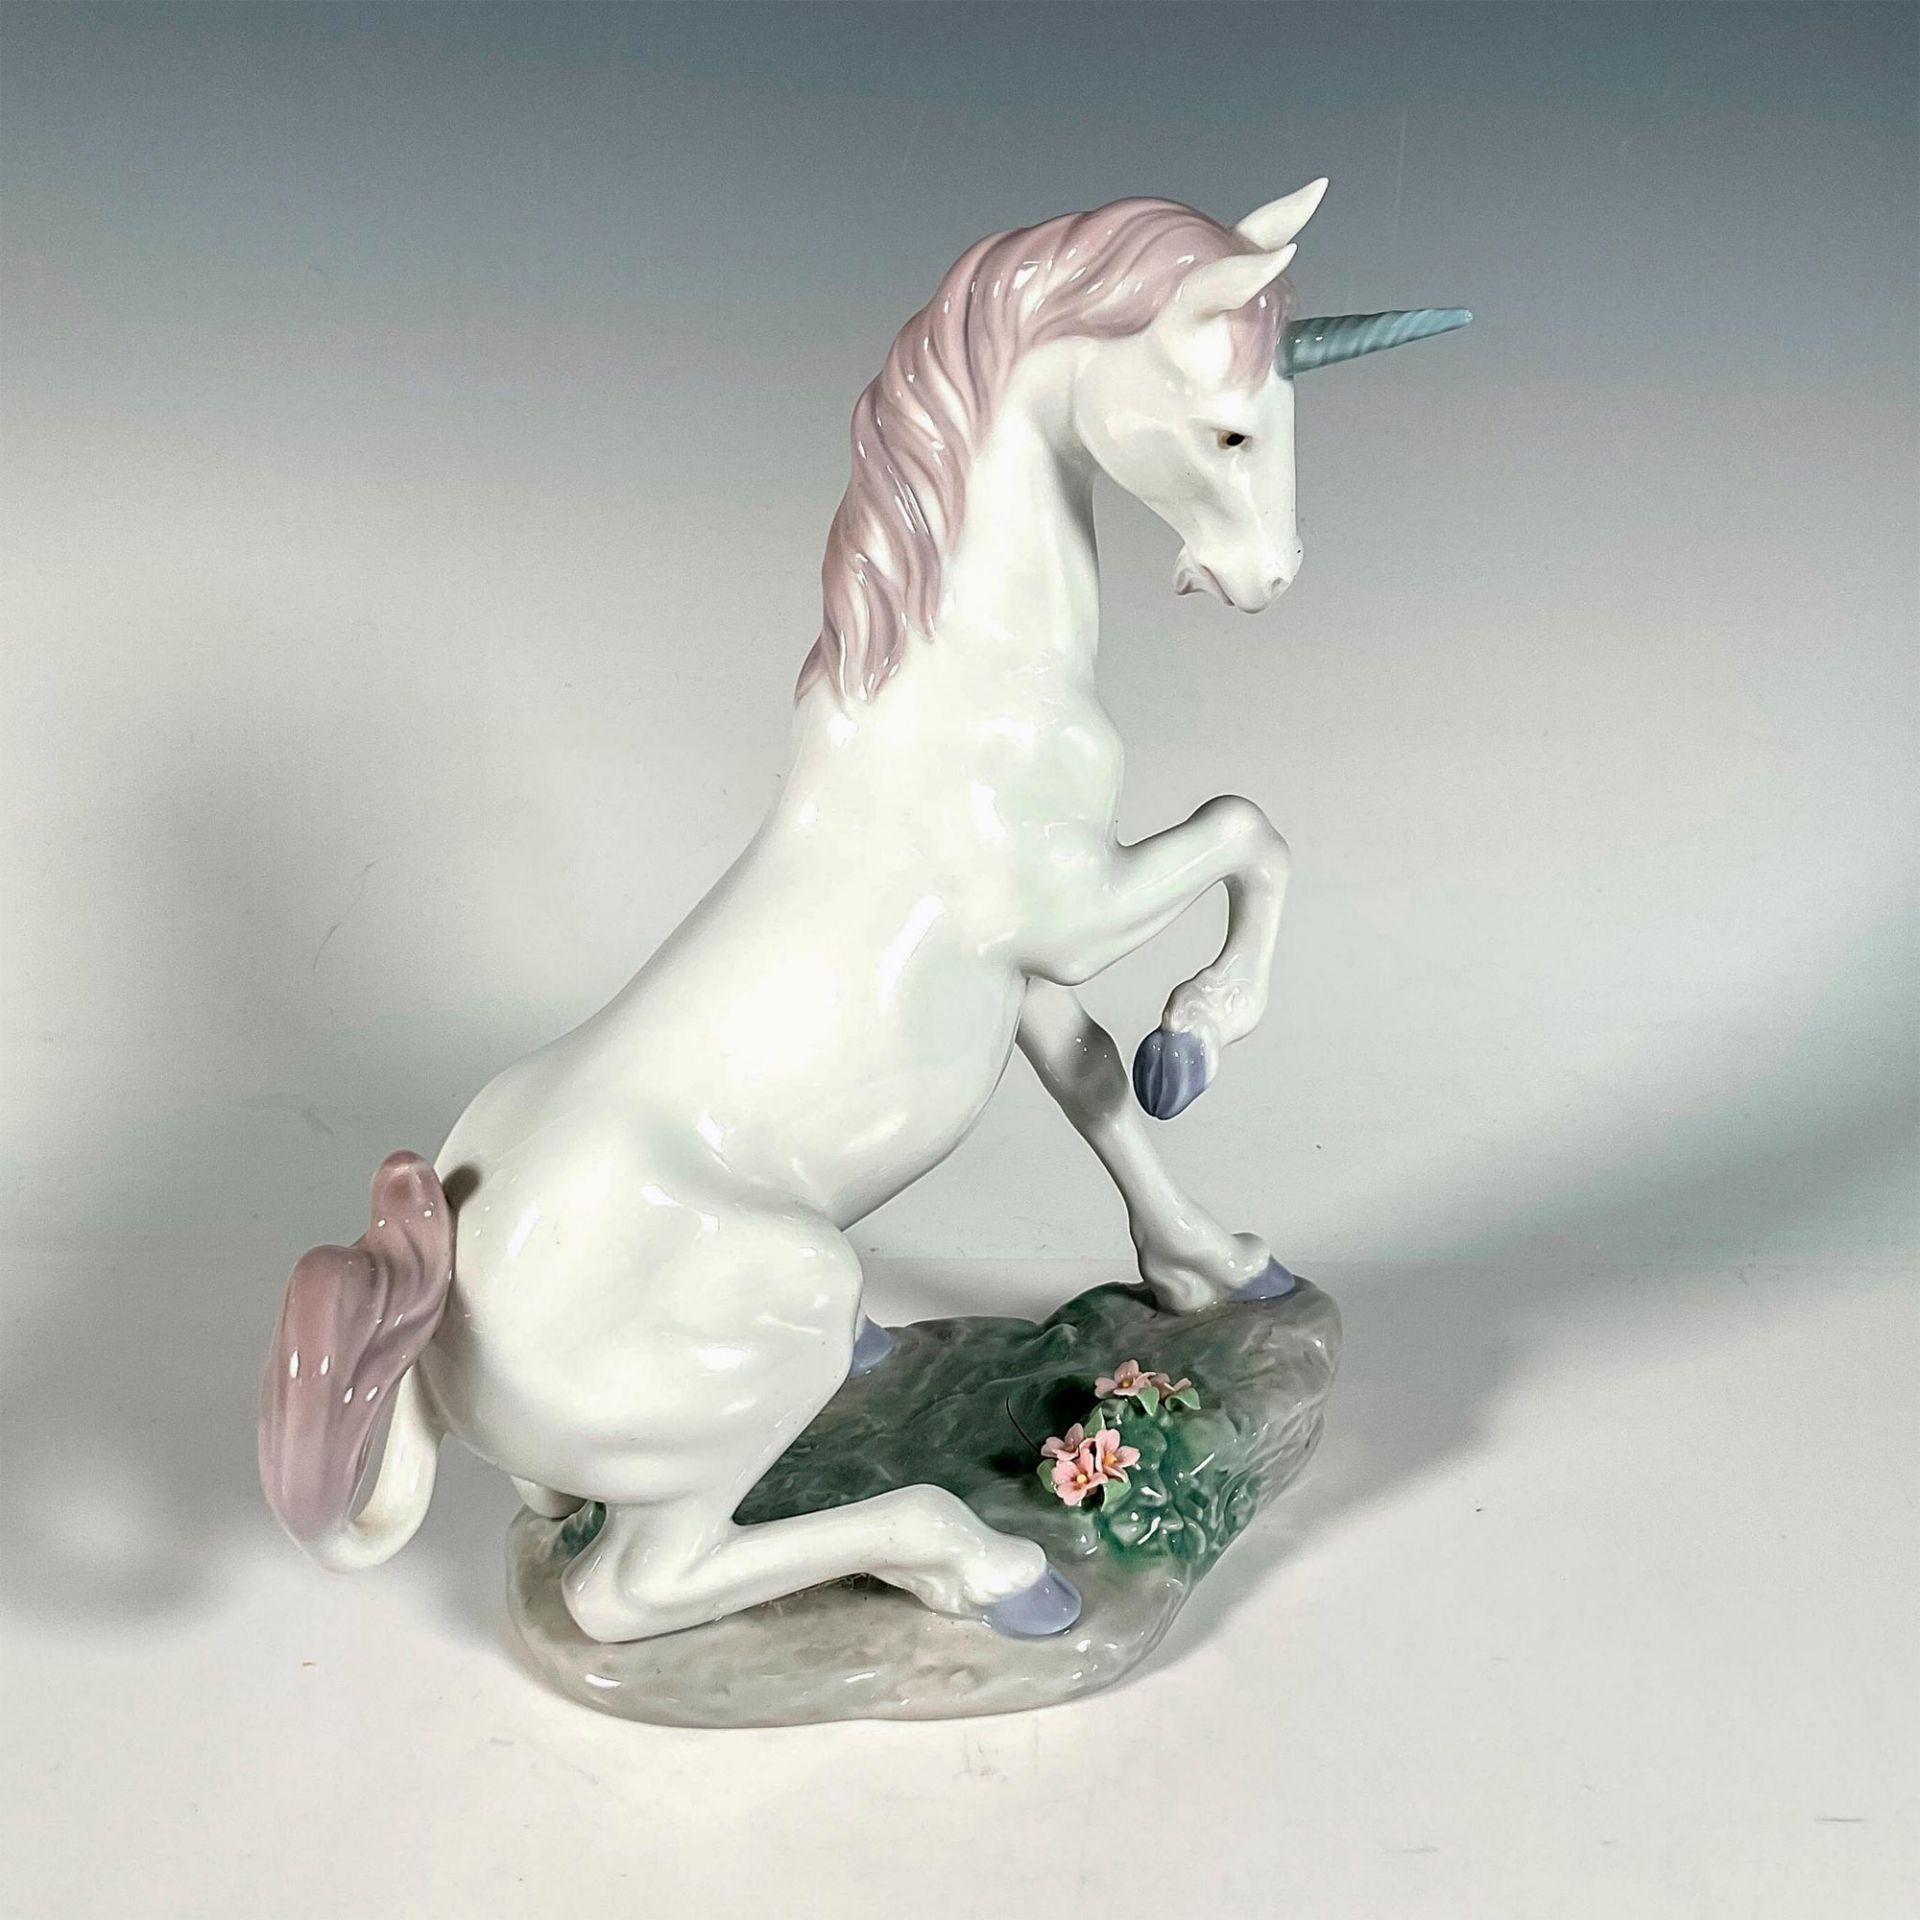 Magical Unicorn 1007697 - Lladro Porcelain Figurine - Image 2 of 6